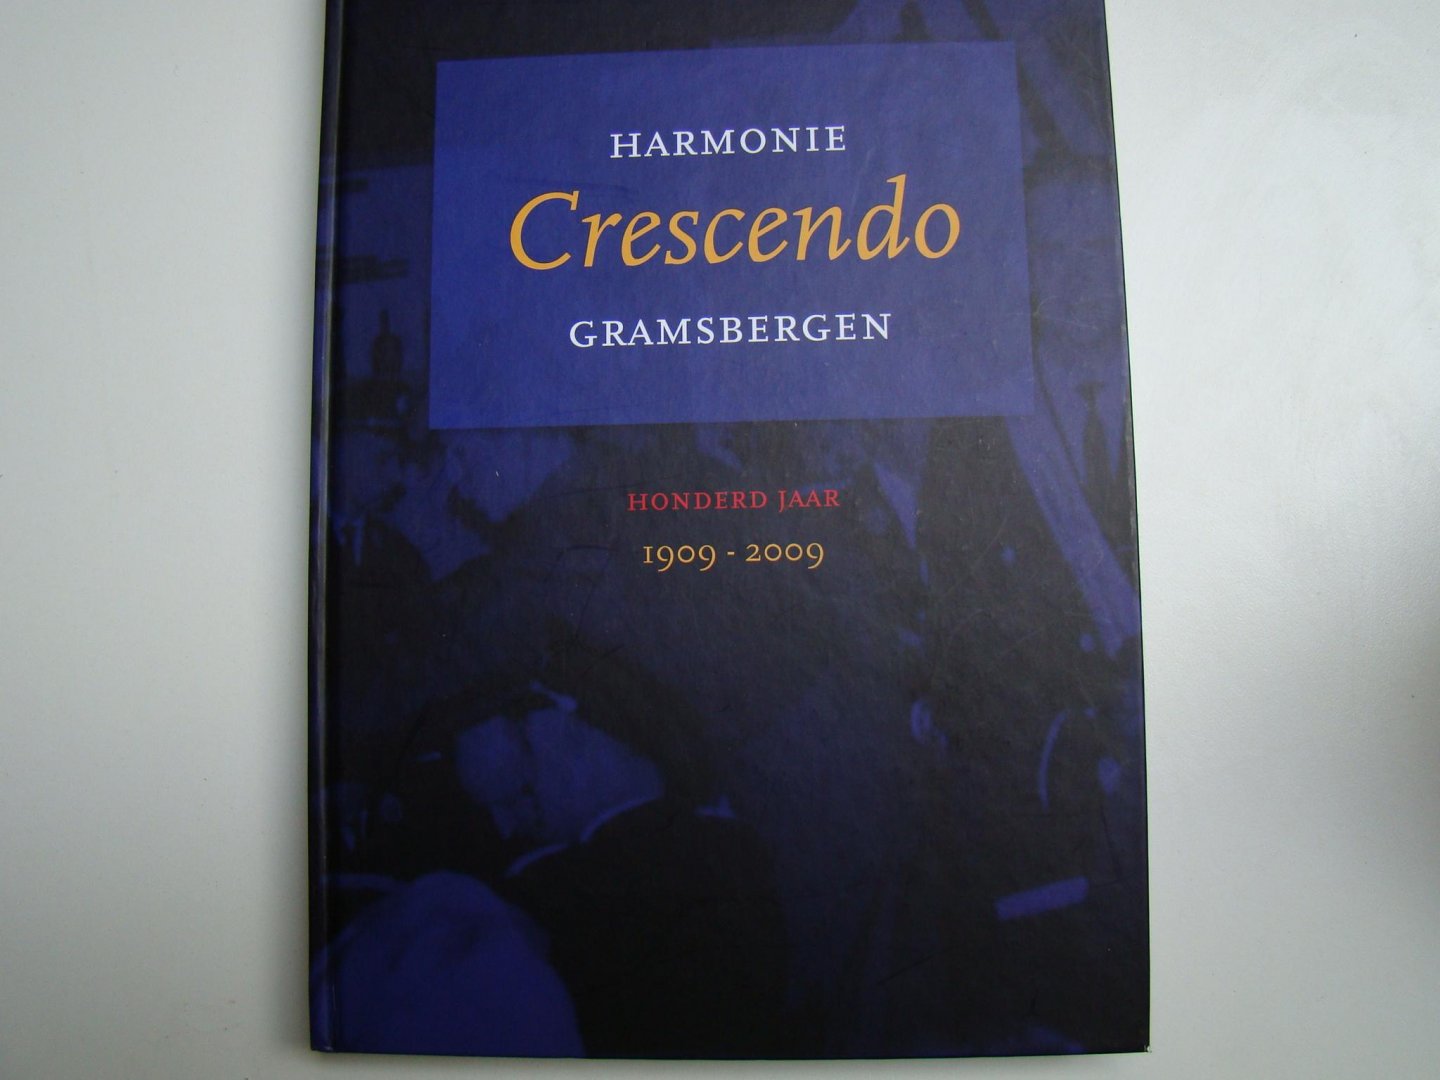 Jubileumcommissie muziekvereniging Gramsbergen - Harmonie Crescendo Gramsbergen - Honderd jaar  1909 - 2009